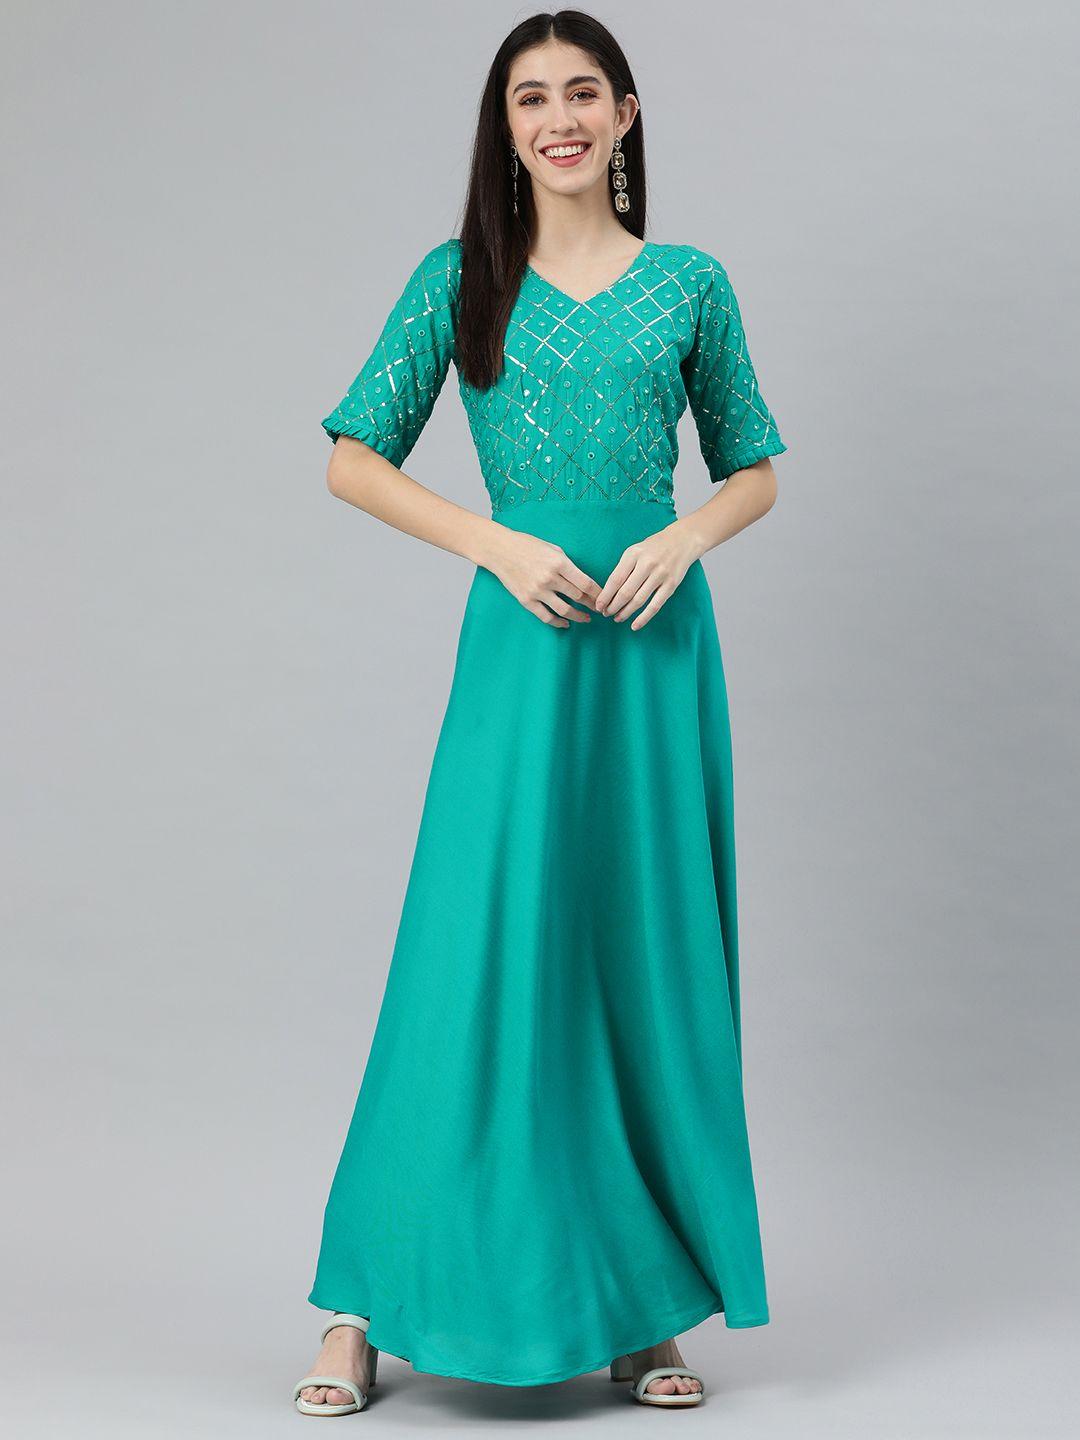 swishchick women turquoise blue sequined solid ethnic maxi dress